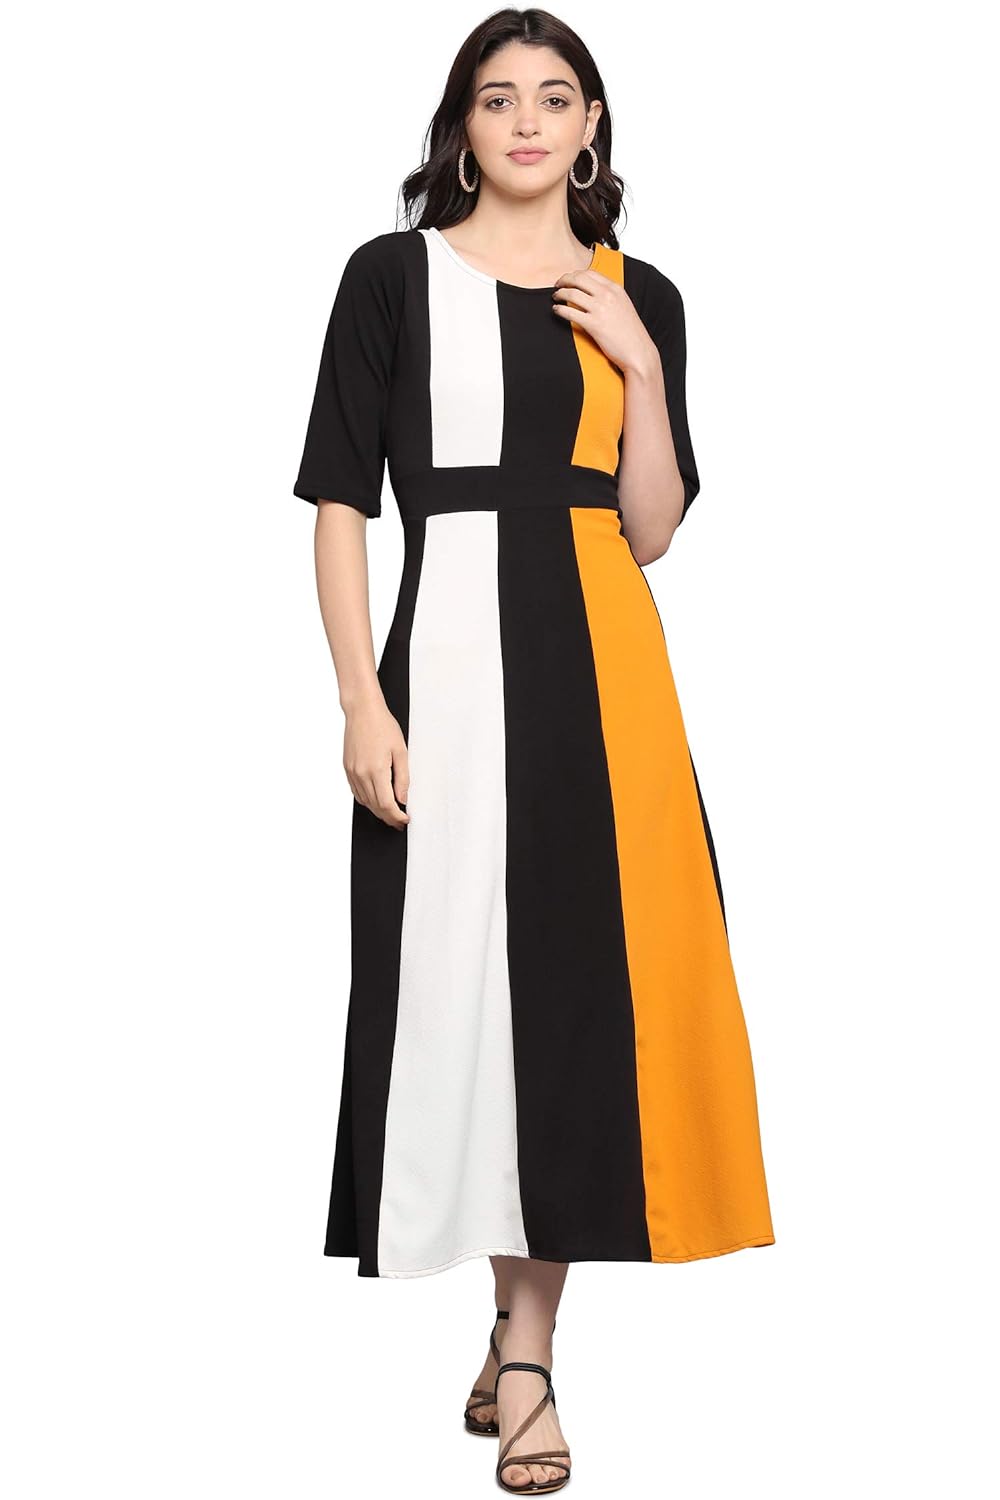 PURVAJA Women's Empire Maxi Dress (Lucy-022-YW-BL-M_Black_Medium)